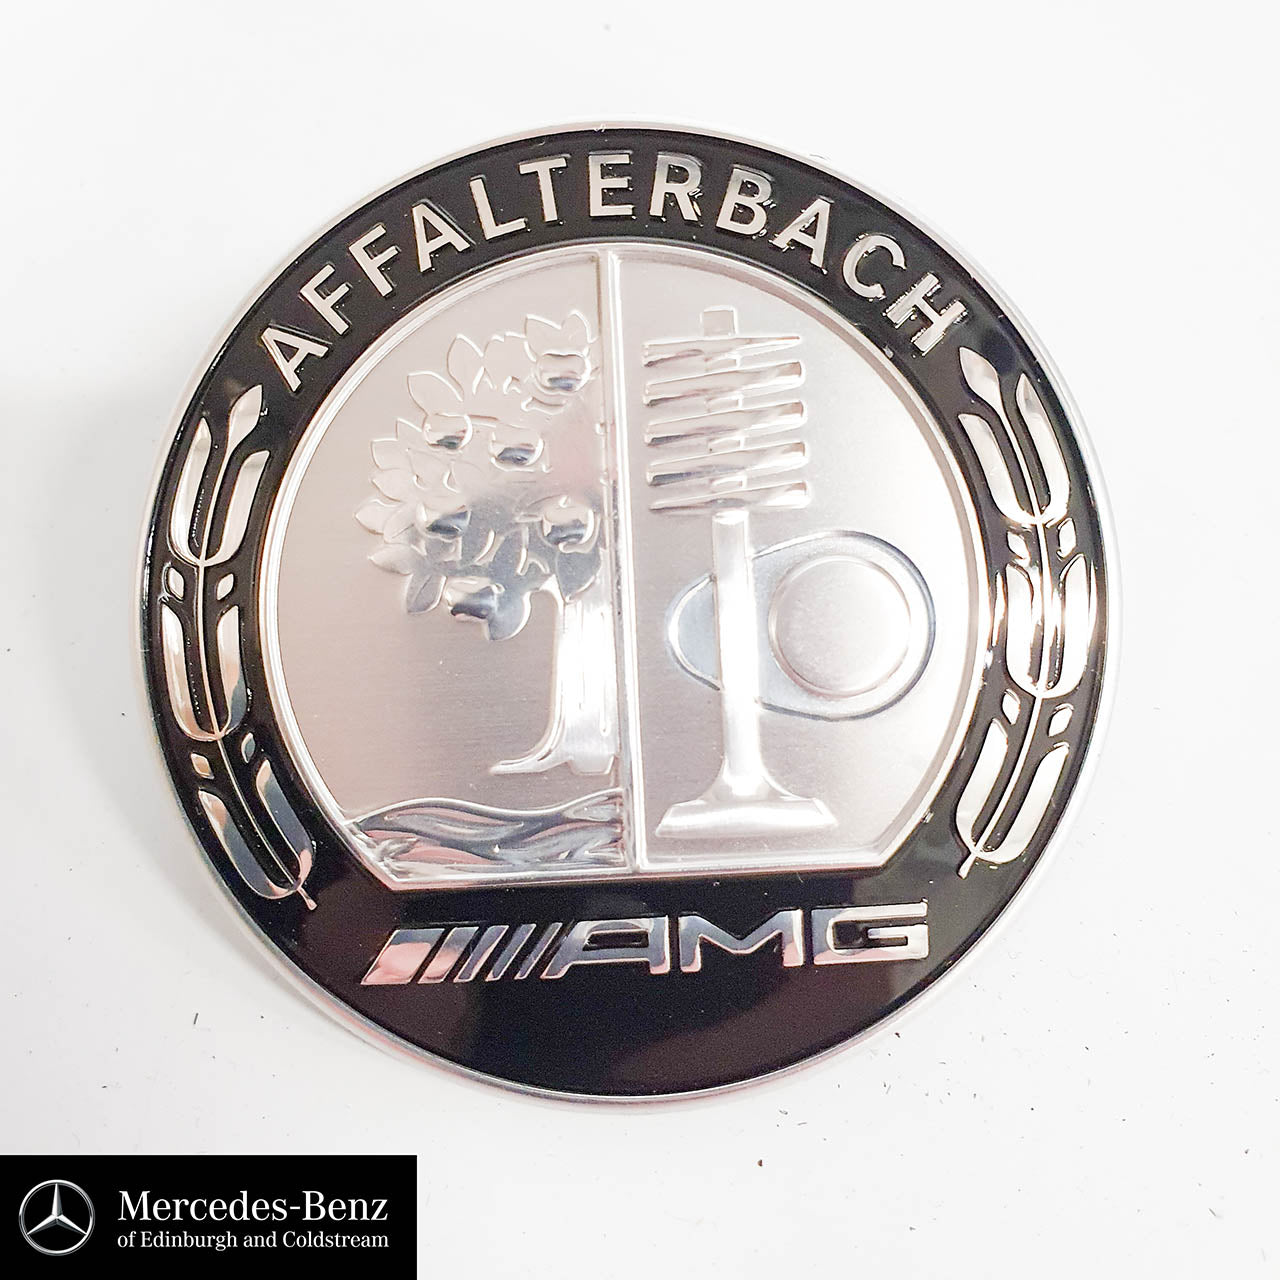 Mercedes AMG Bonnet Badge front emblem logo A0008170708